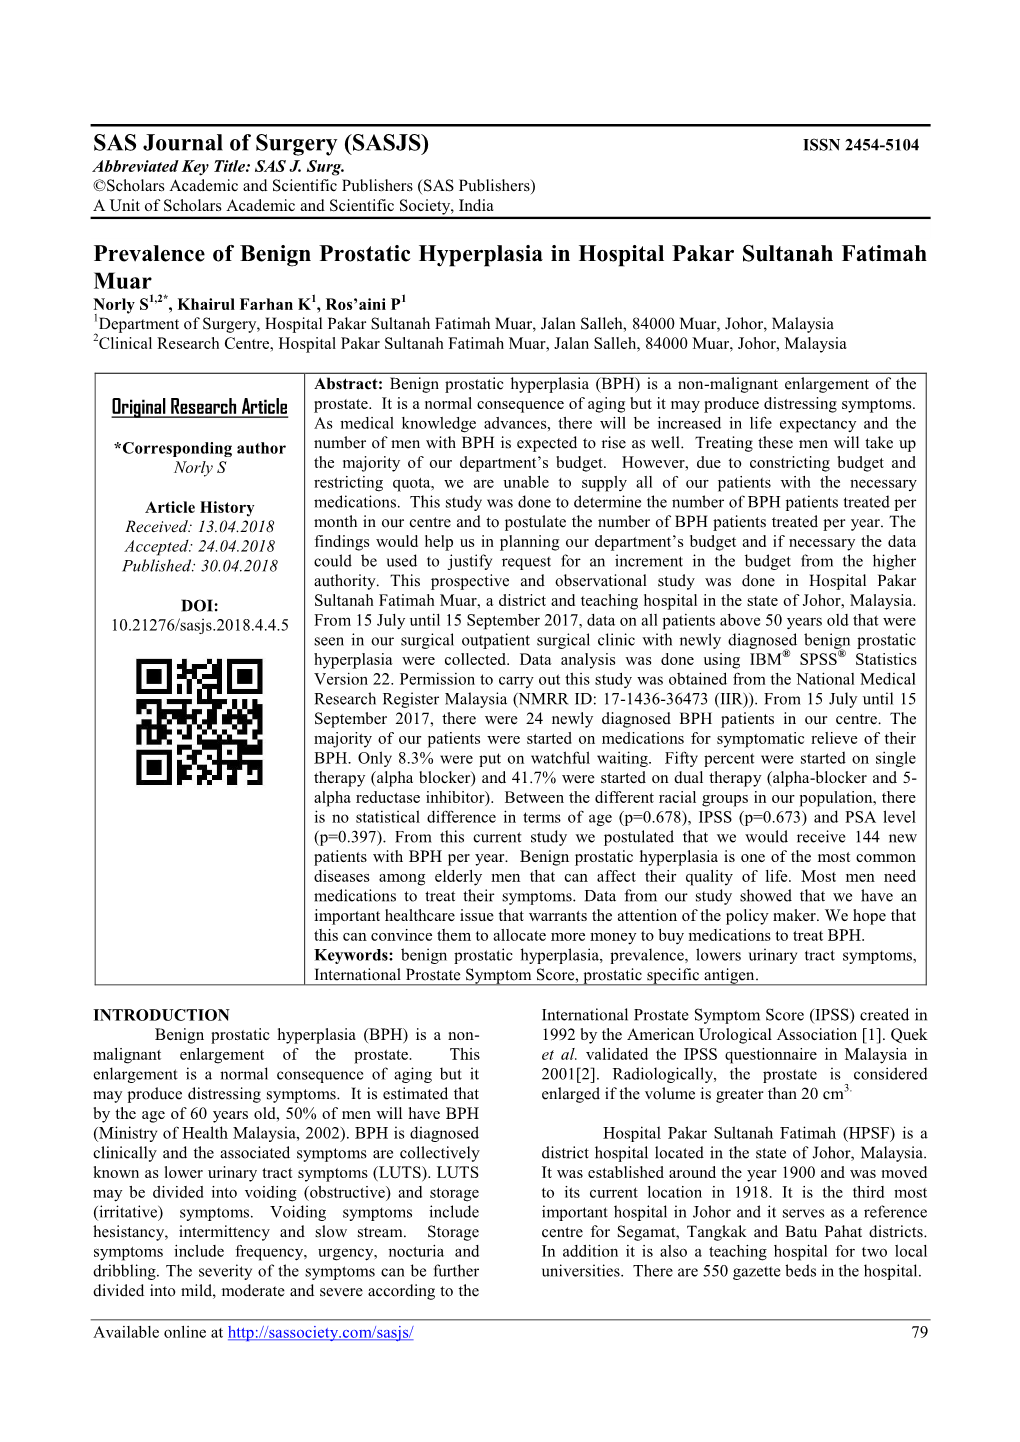 (SASJS) Prevalence of Benign Prostatic Hyperplasia in Hospital